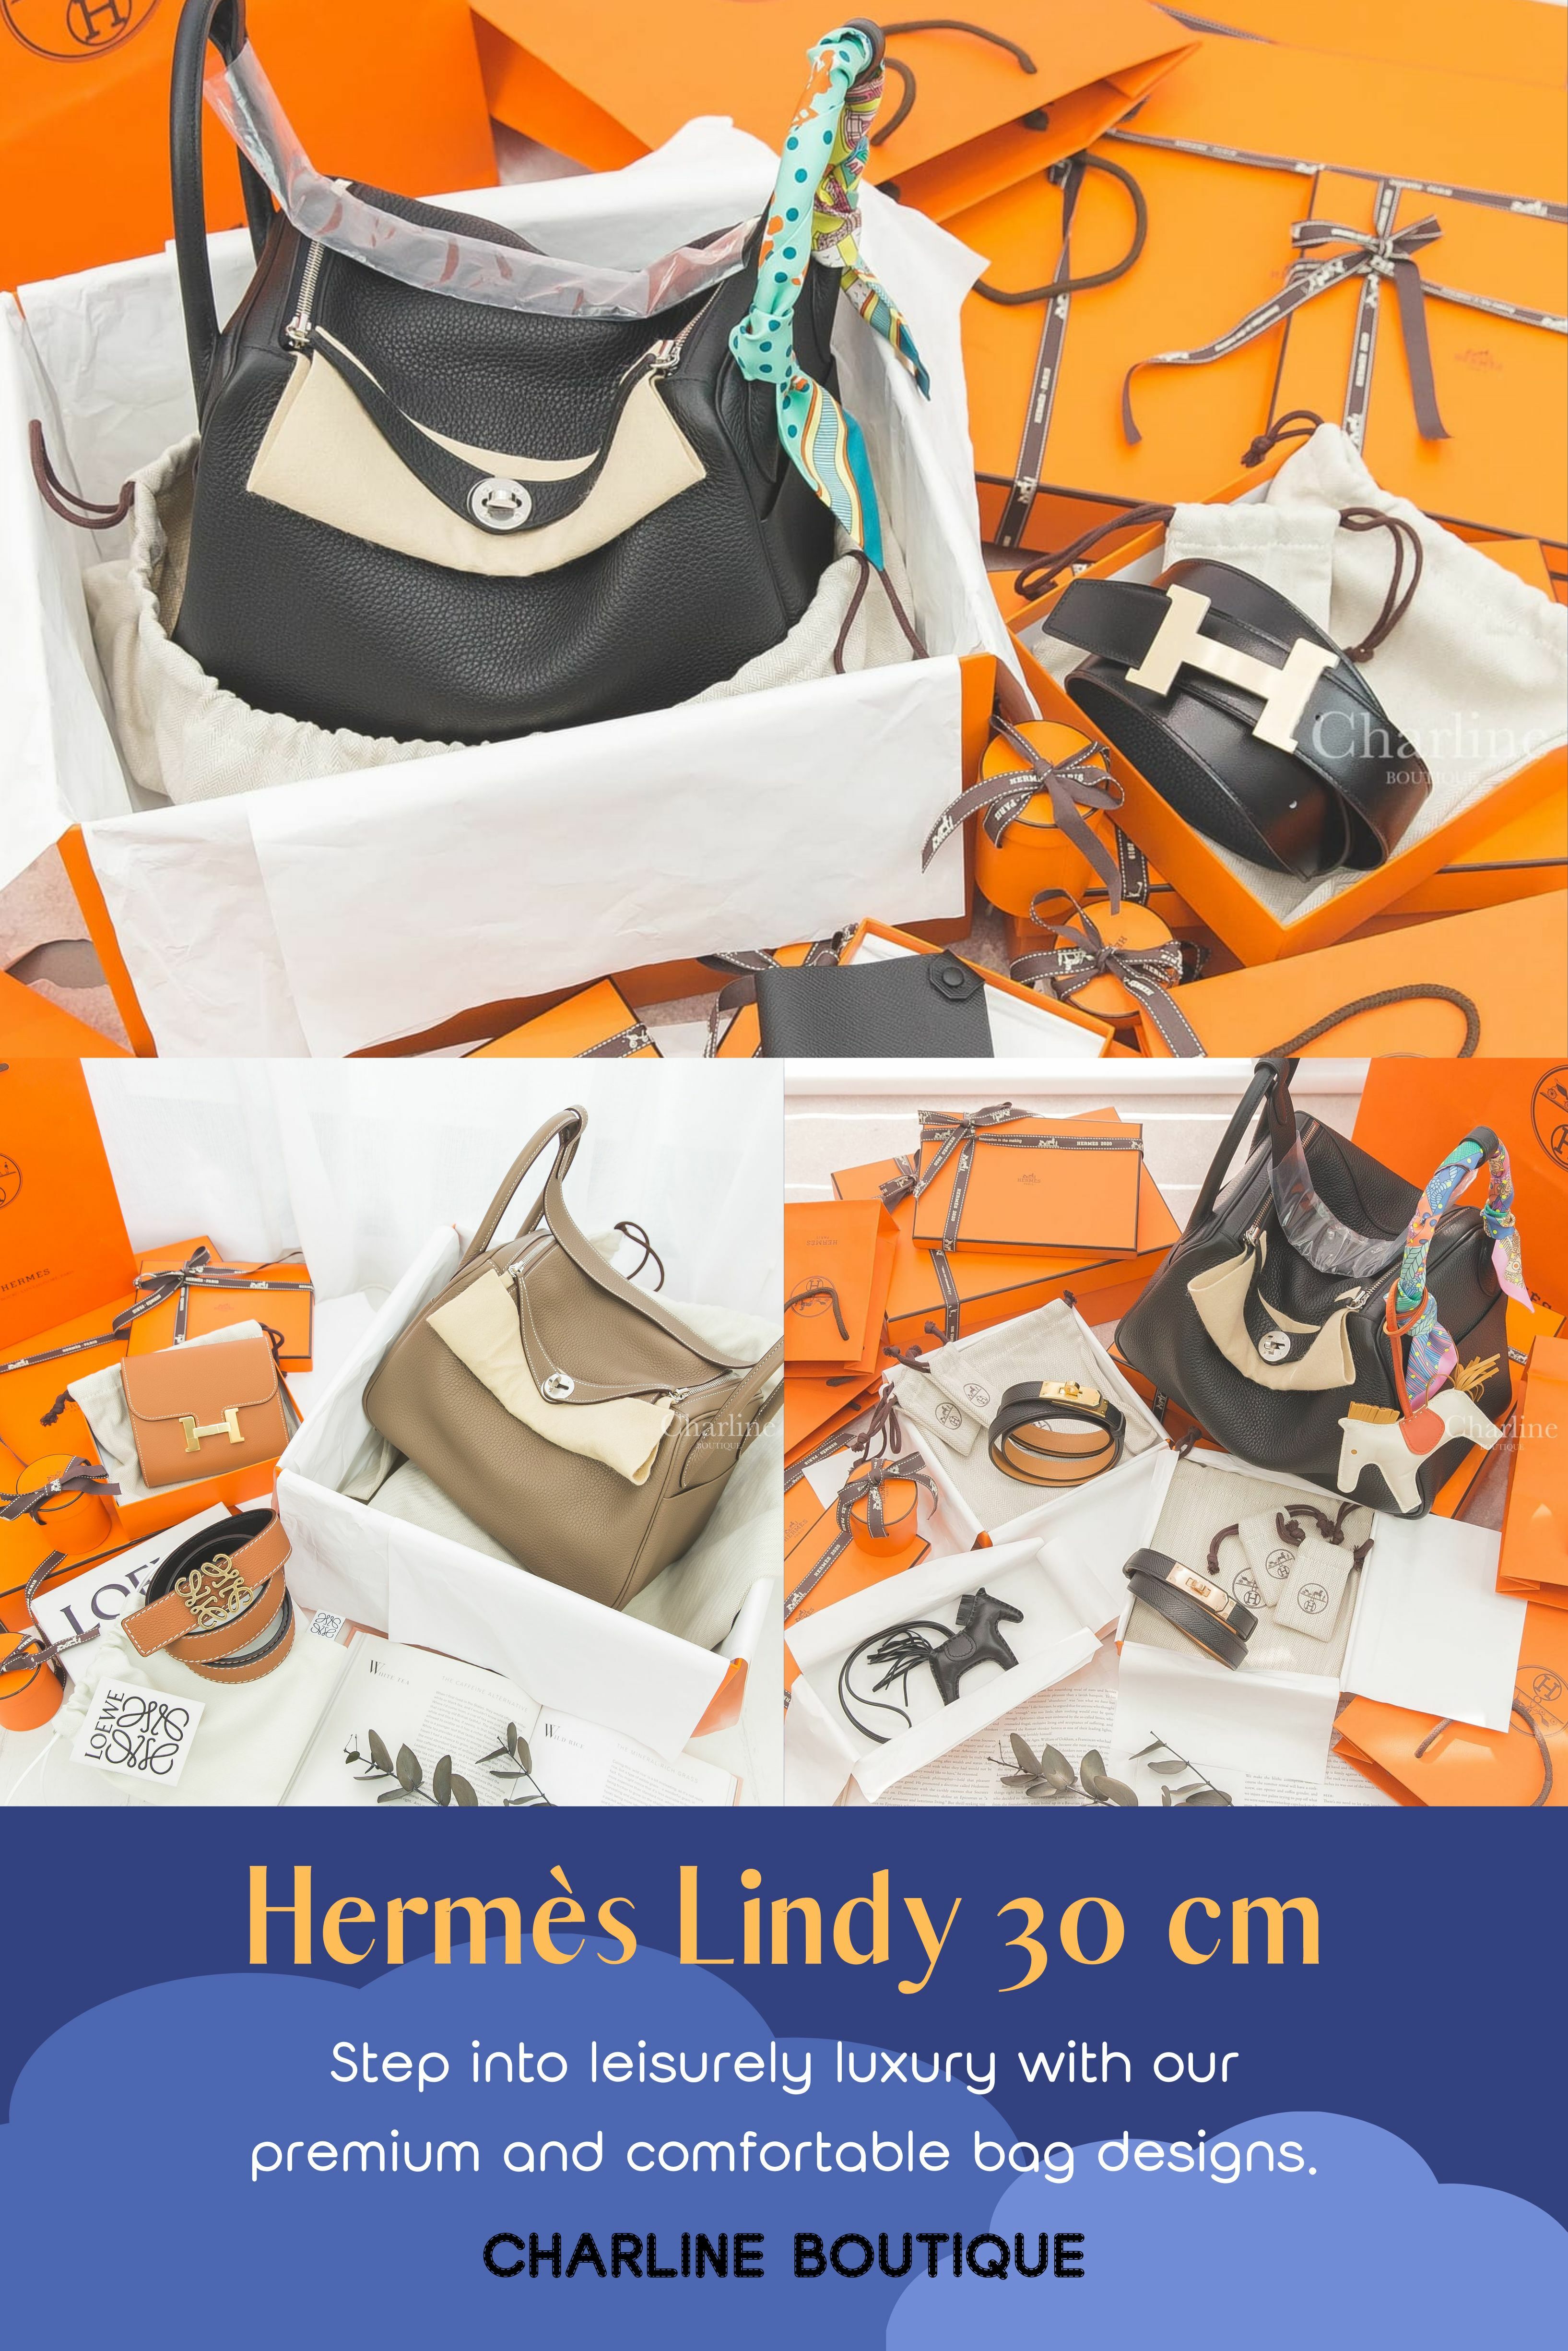 Hermès Lindy誕生於2007年，靈感源自1920年代紐約的Lindy Hop舞蹈，以獨特的造型和對稱結構著稱。雙拉鍊設計方便取用，雙手柄和肩帶使攜帶方式多樣，寬敞內部可容納日常所需，外觀輕鬆隨性。尺寸包括Mini、26cm、30cm和34cm，滿足不同需求。儘管尺寸微差，Hermès Lindy不論哪款都融合奢華與時尚，造訪Charline Boutique，找到您心愛的Lindy，享受購物樂趣吧！